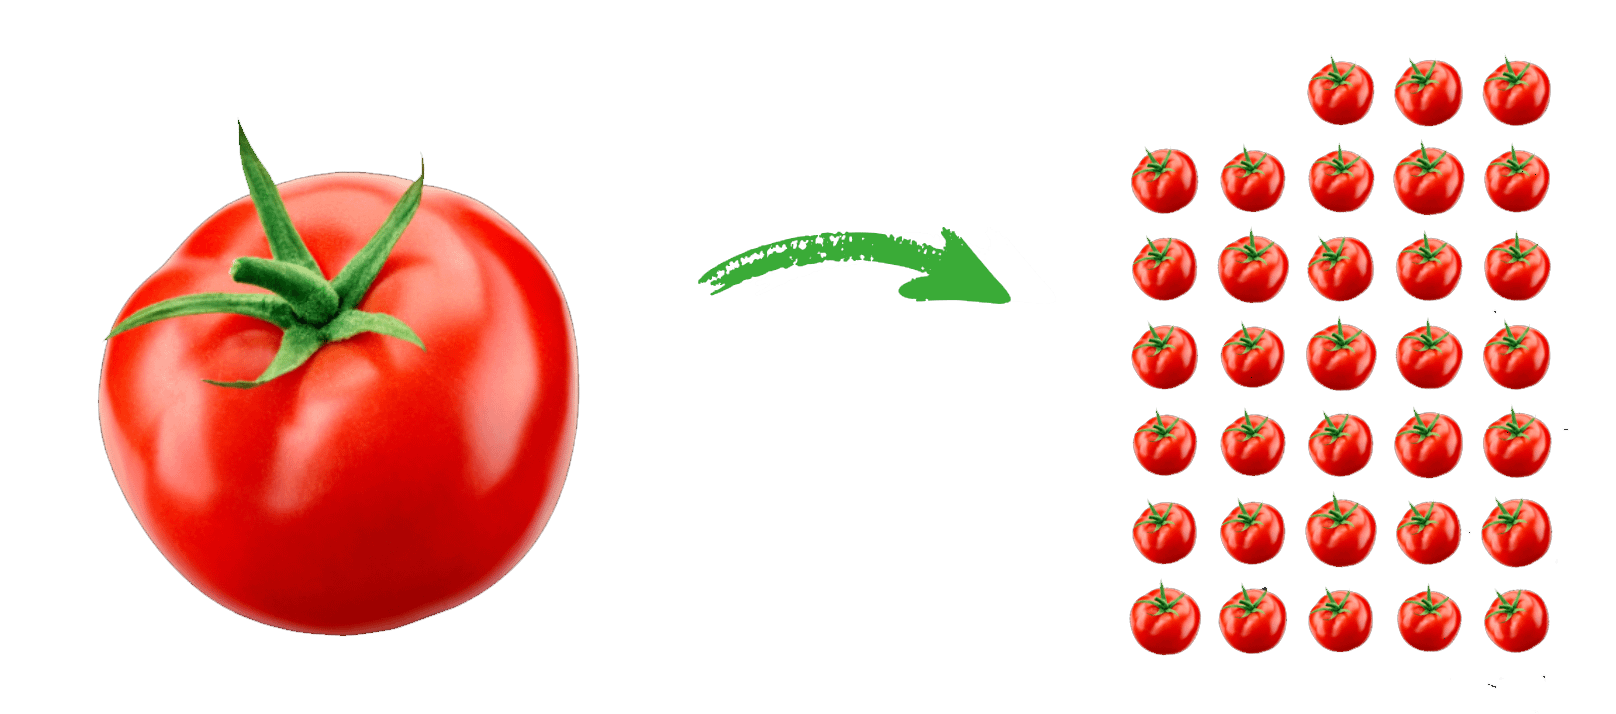 Nährstoffvergleich Tomate